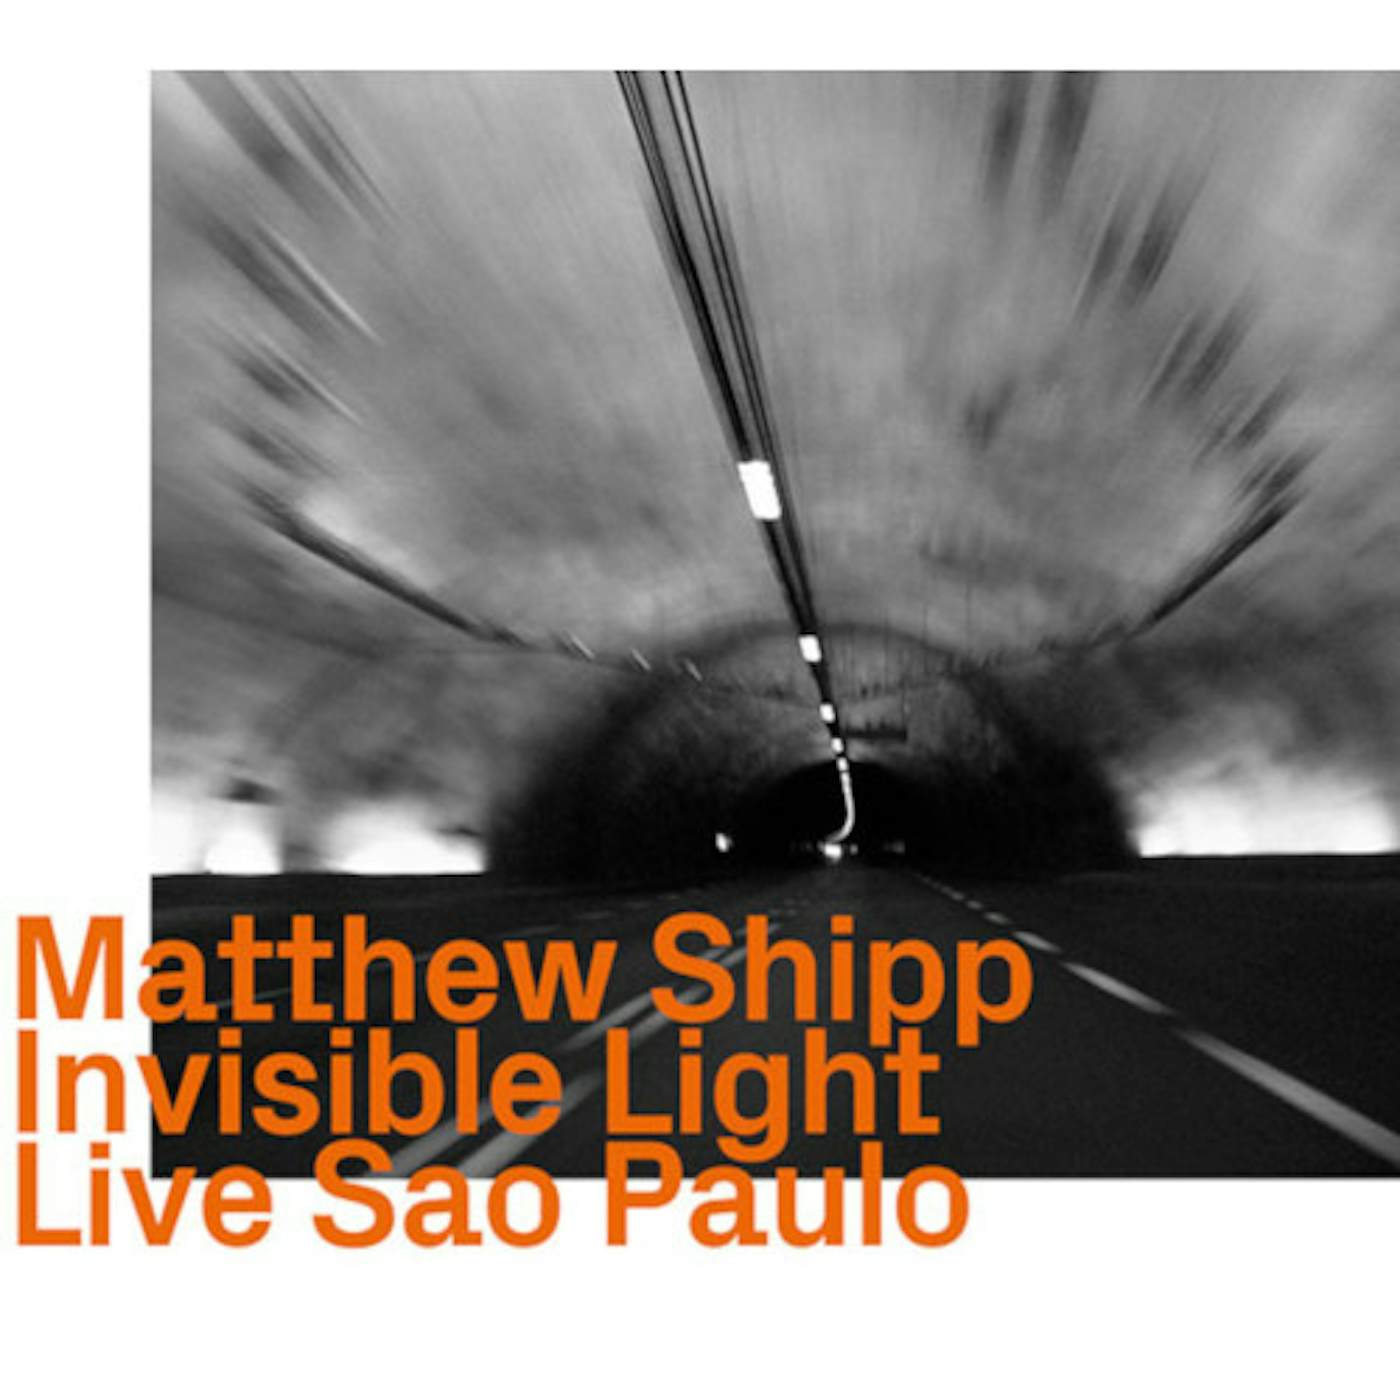 Matthew Shipp INVISIBLE LIGHT: LIVE SAO PAULO CD